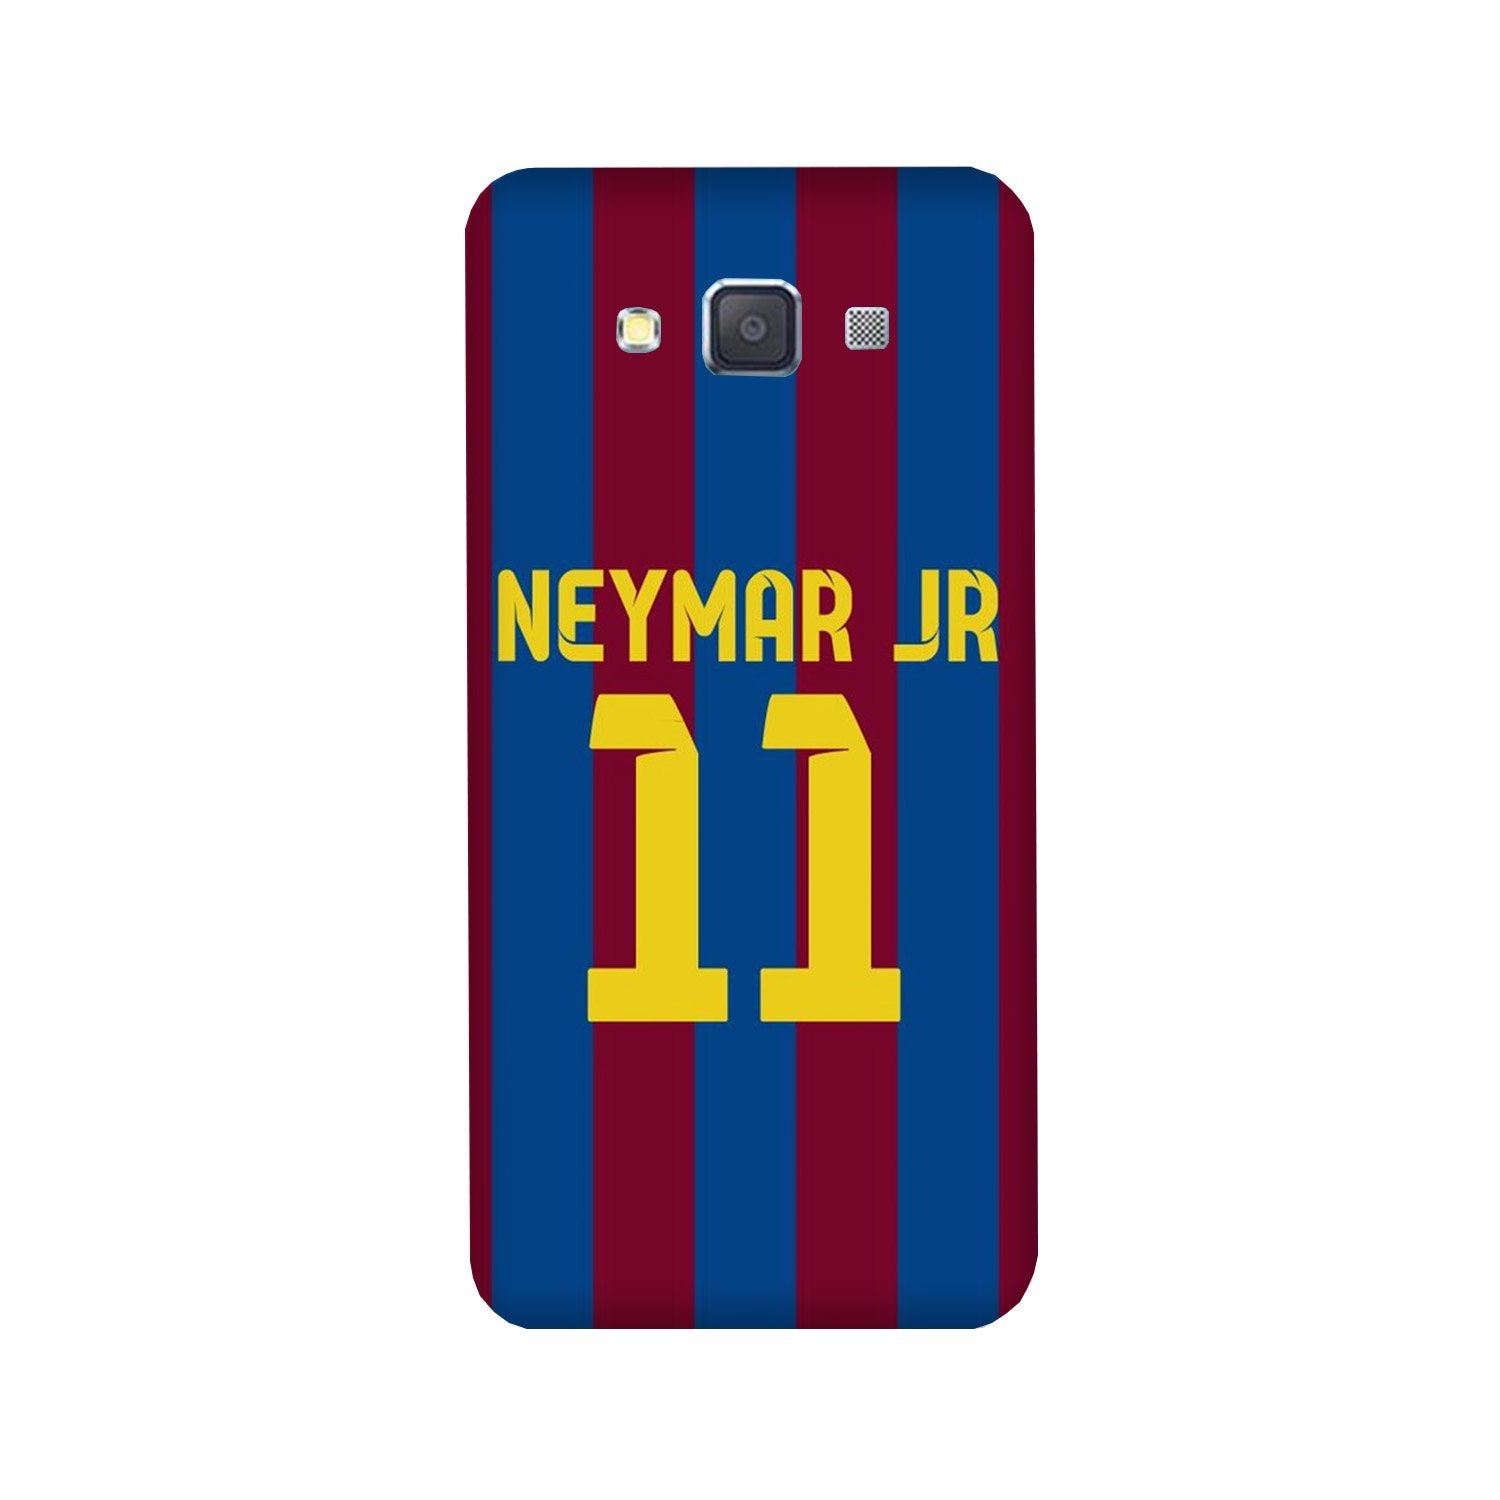 Neymar Jr Case for Galaxy E7(Design - 162)